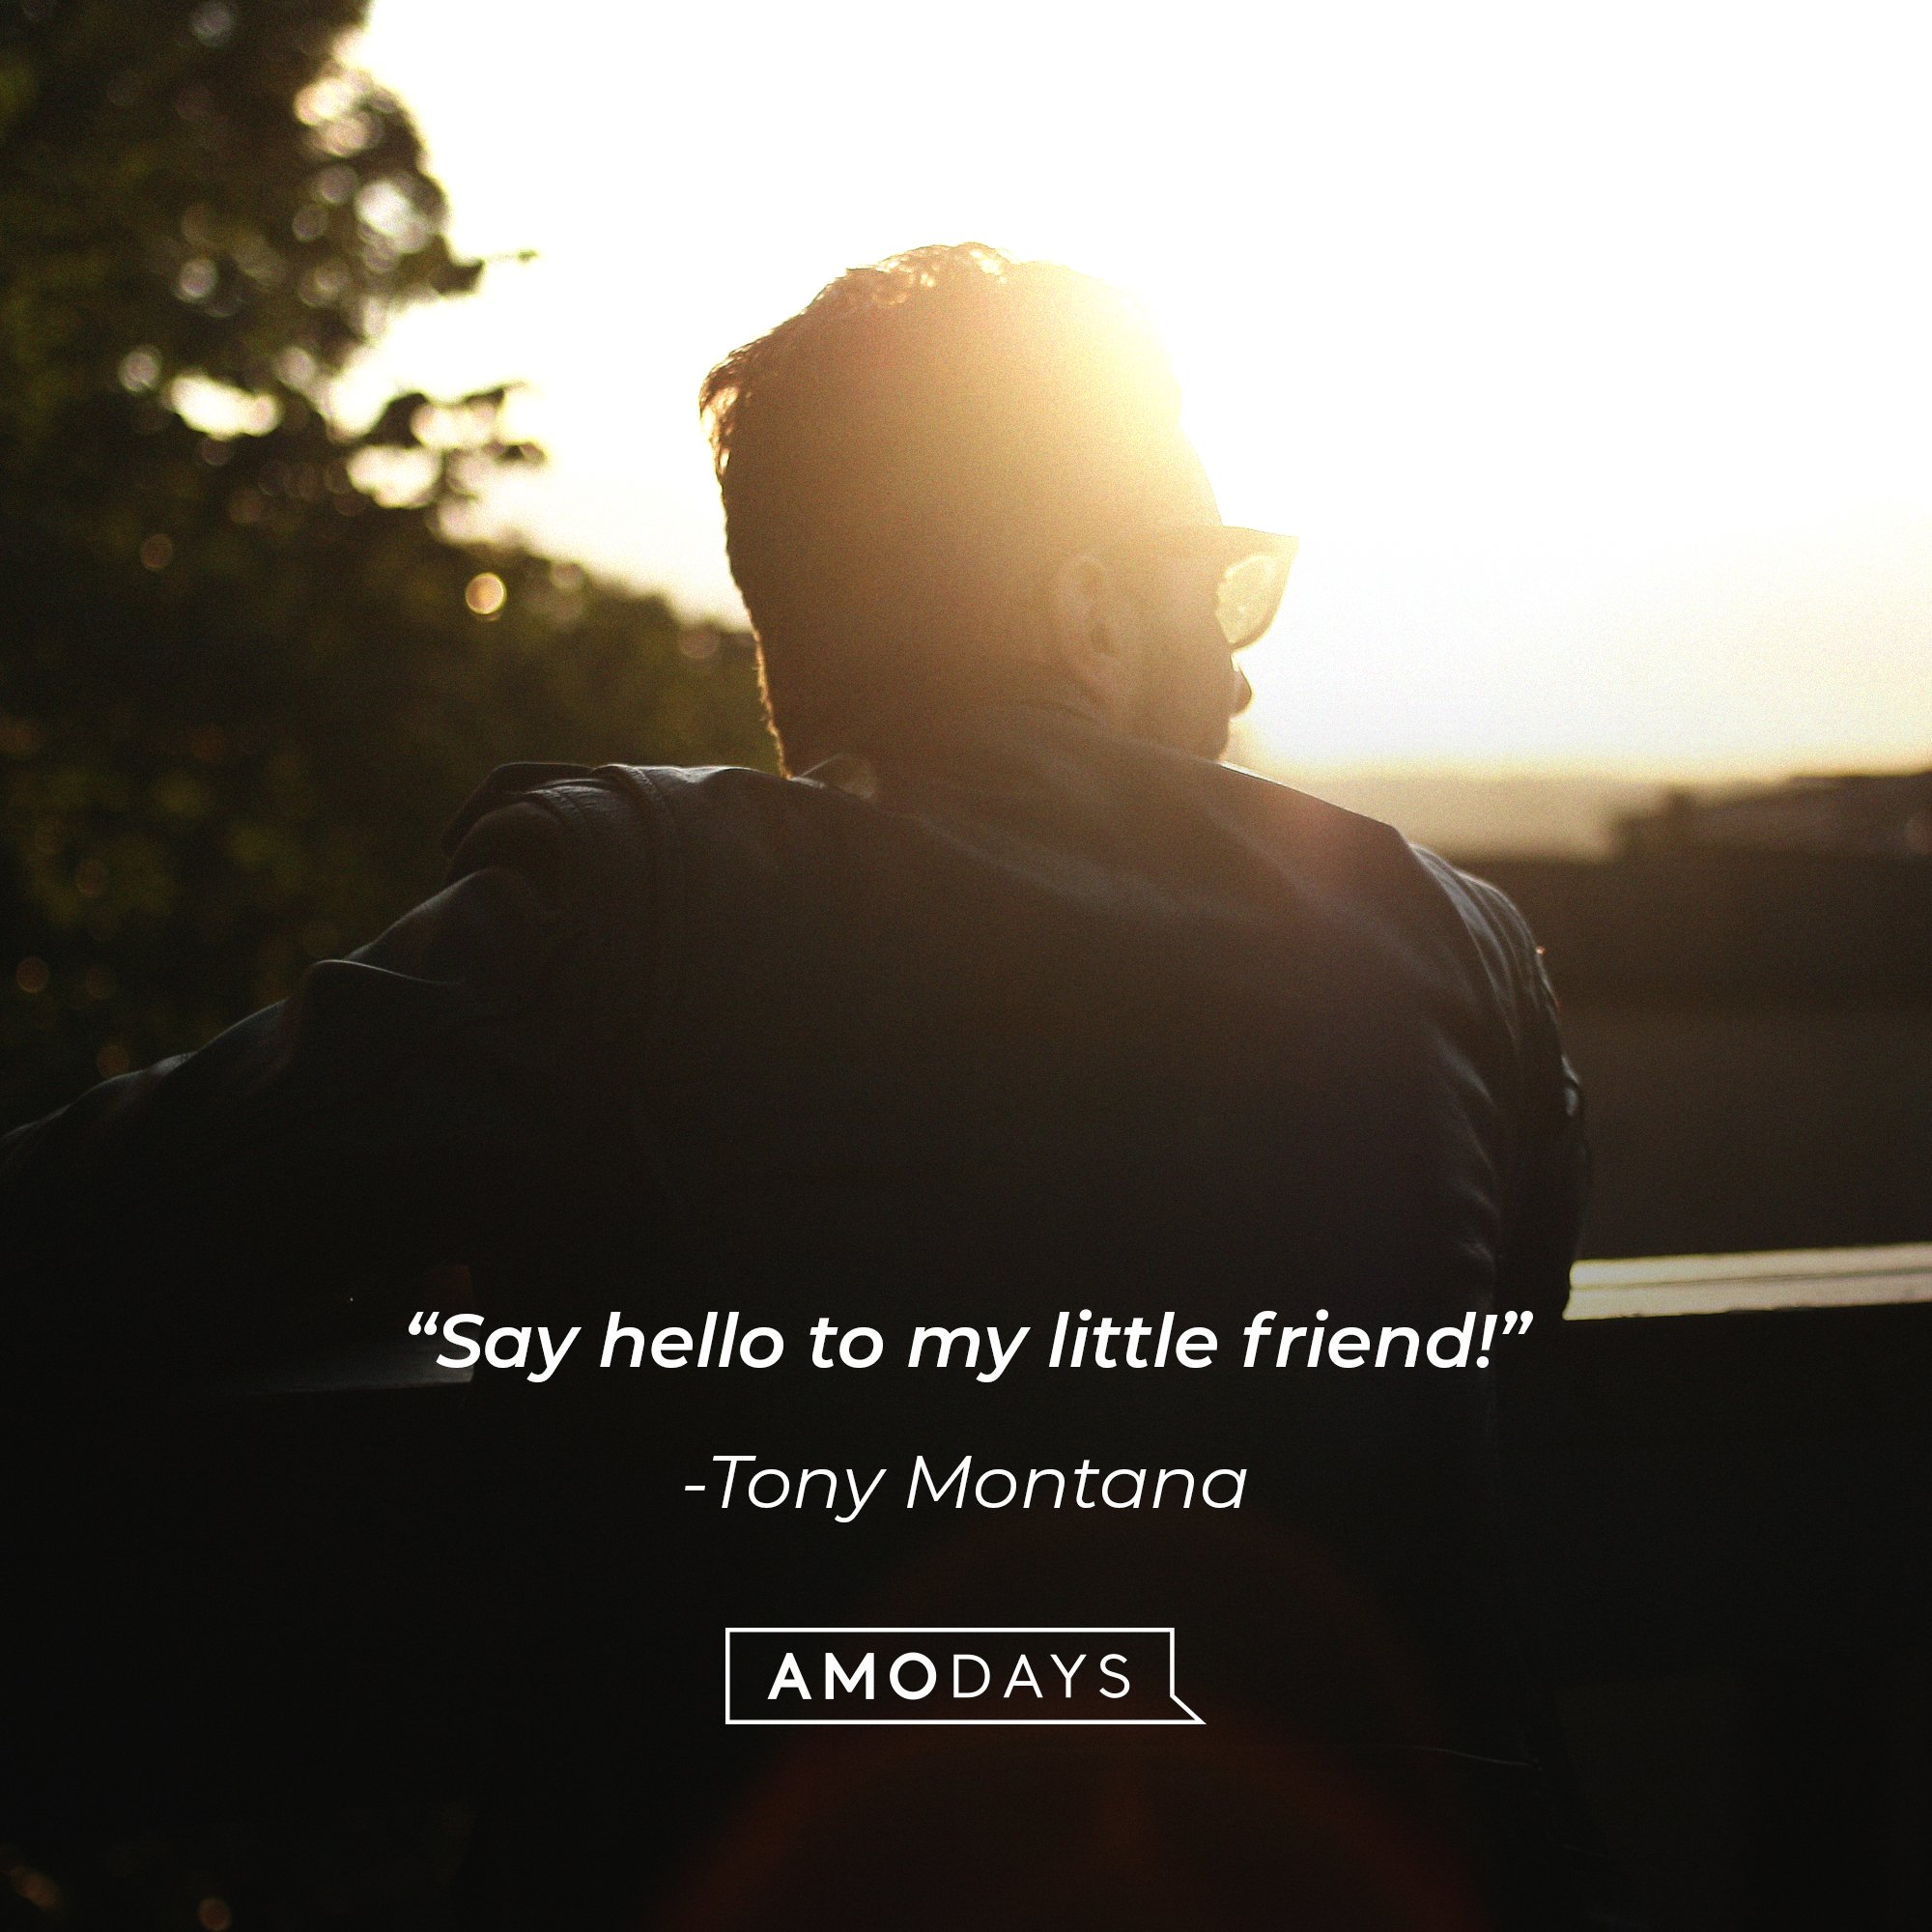 Tony Montana’s quote: “Say hello to my little friend!” | Image: AmoDays